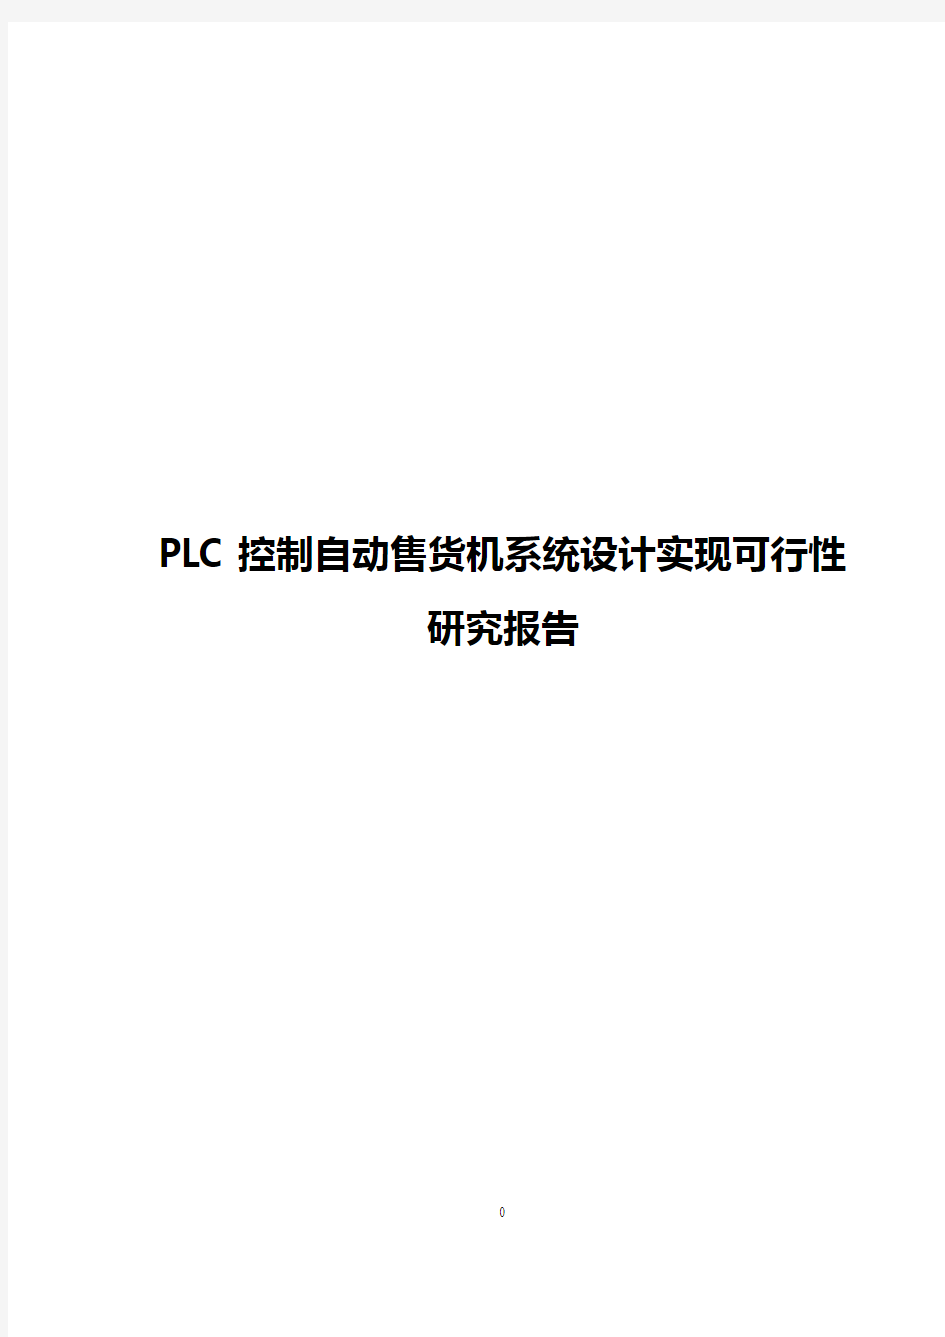 PLC控制自动售货机系统设计实现可行性研究报告